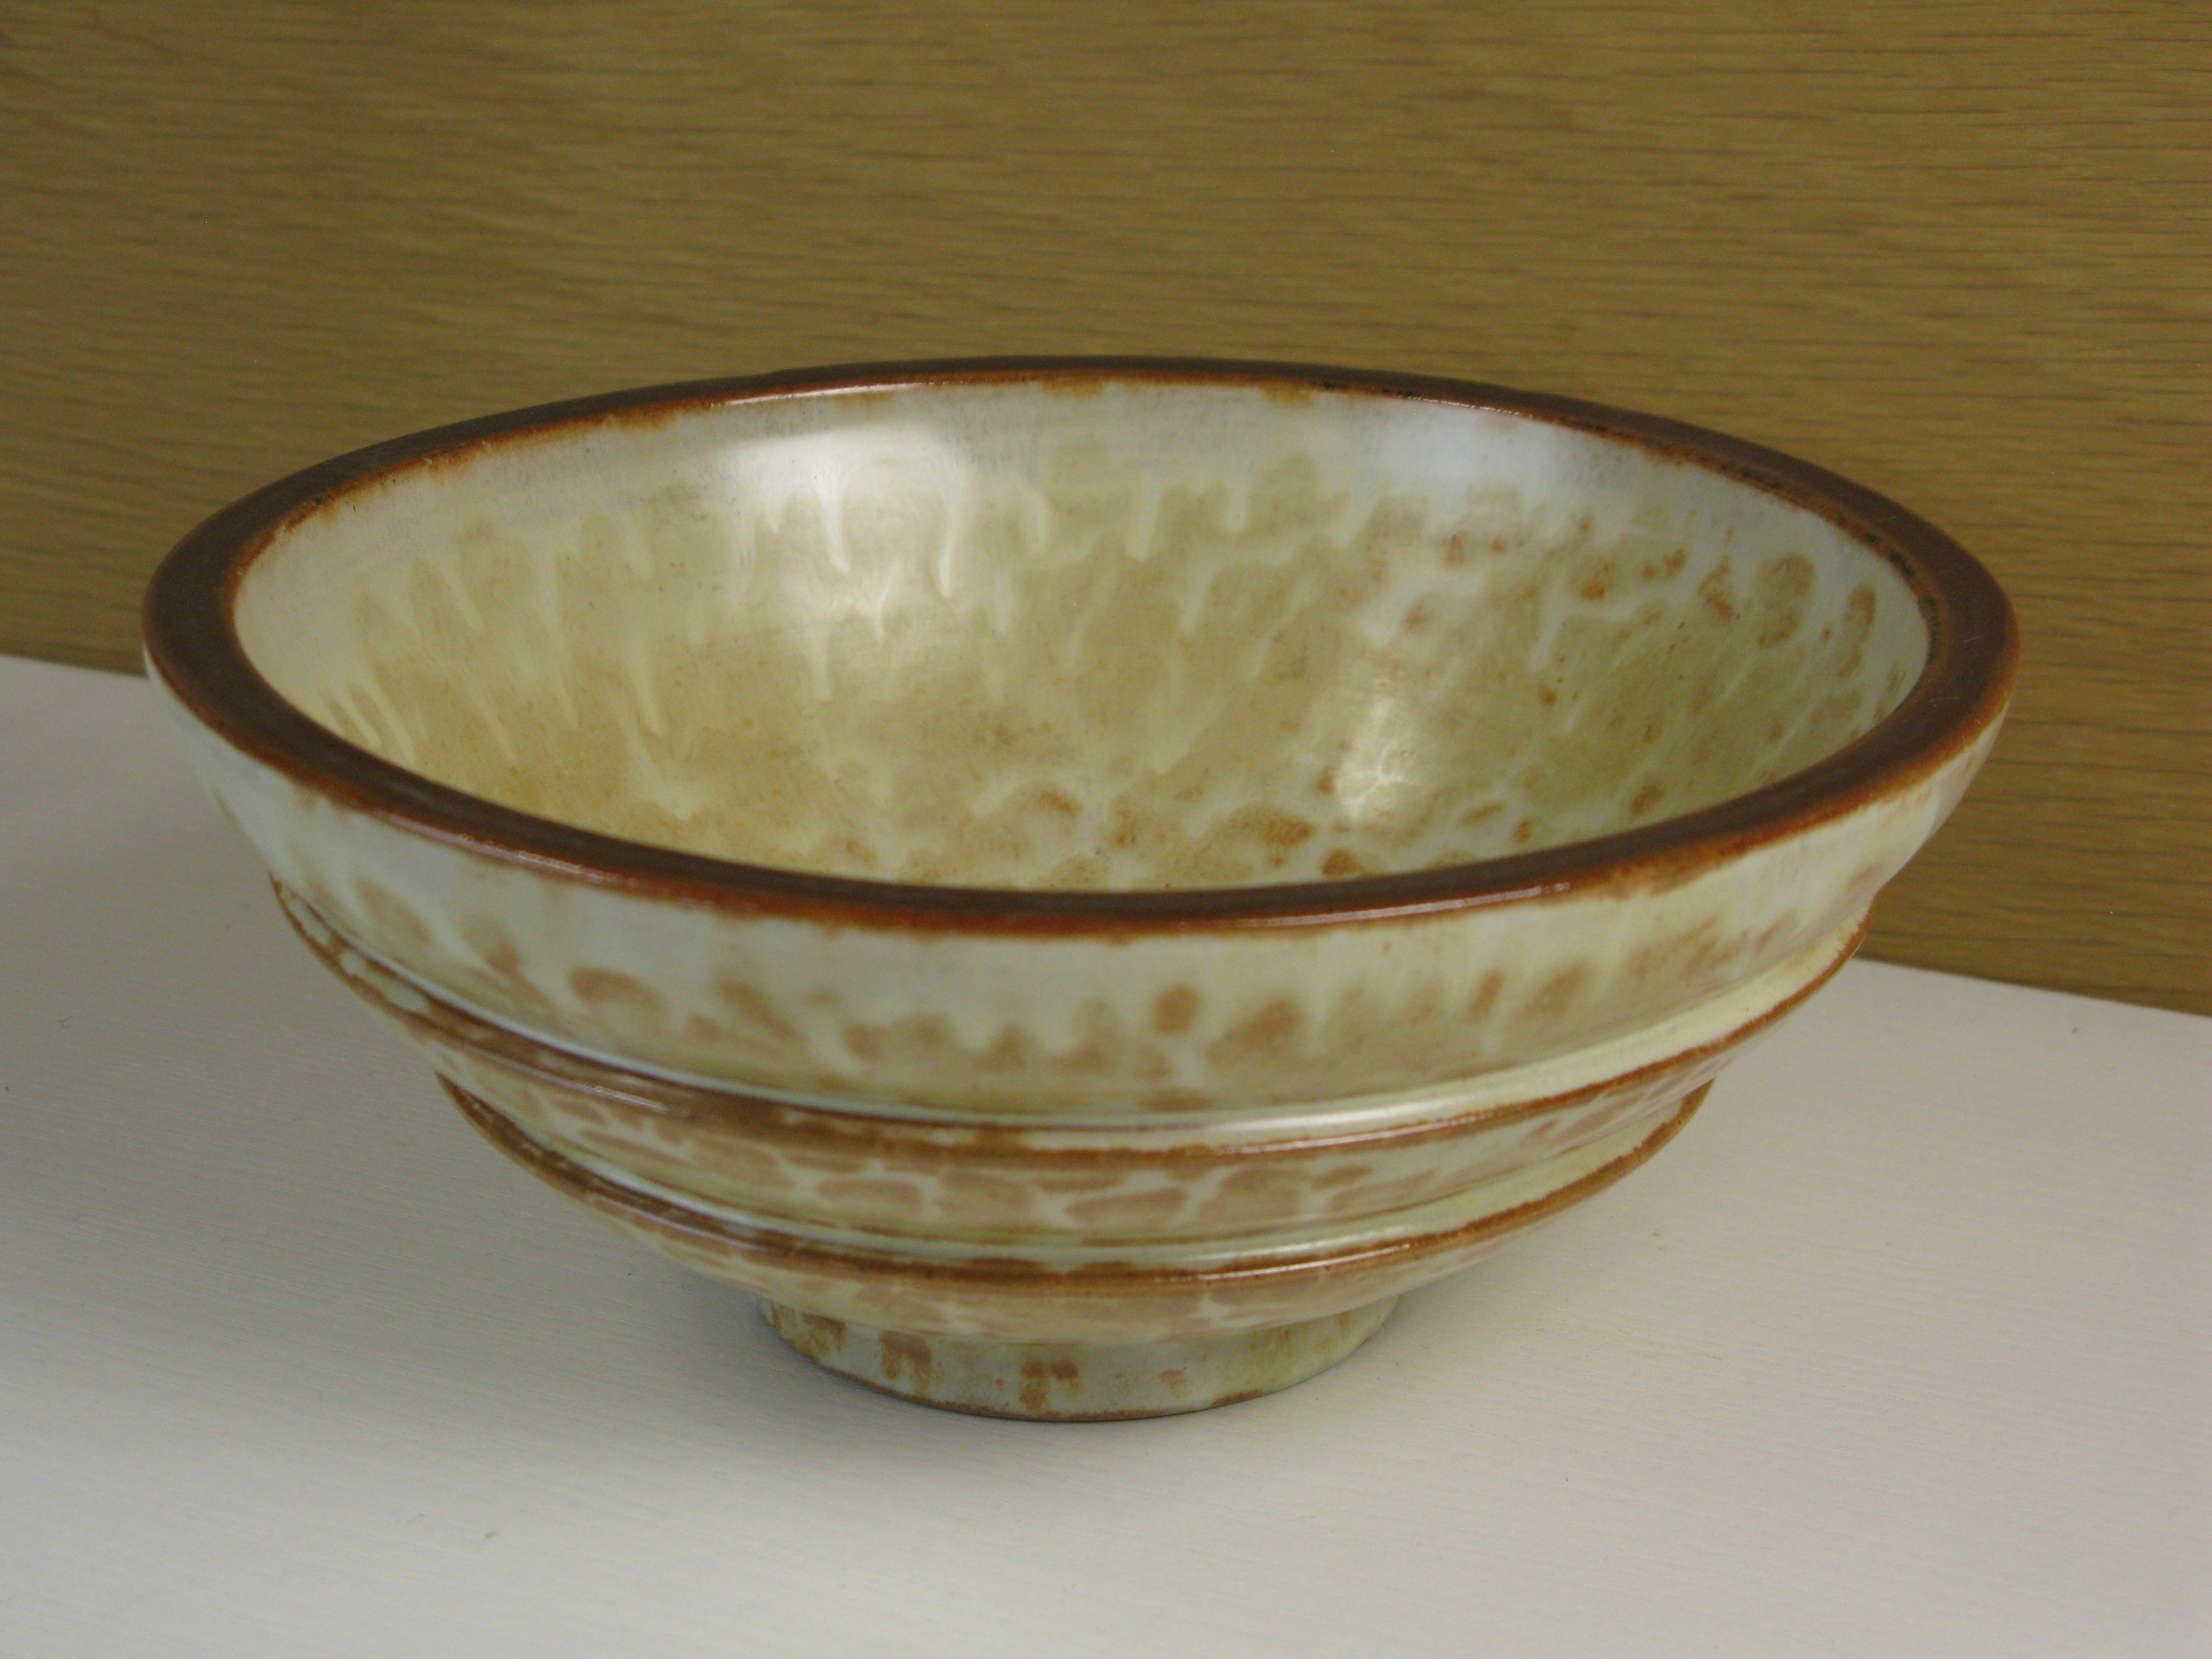 yellowish bowl 199